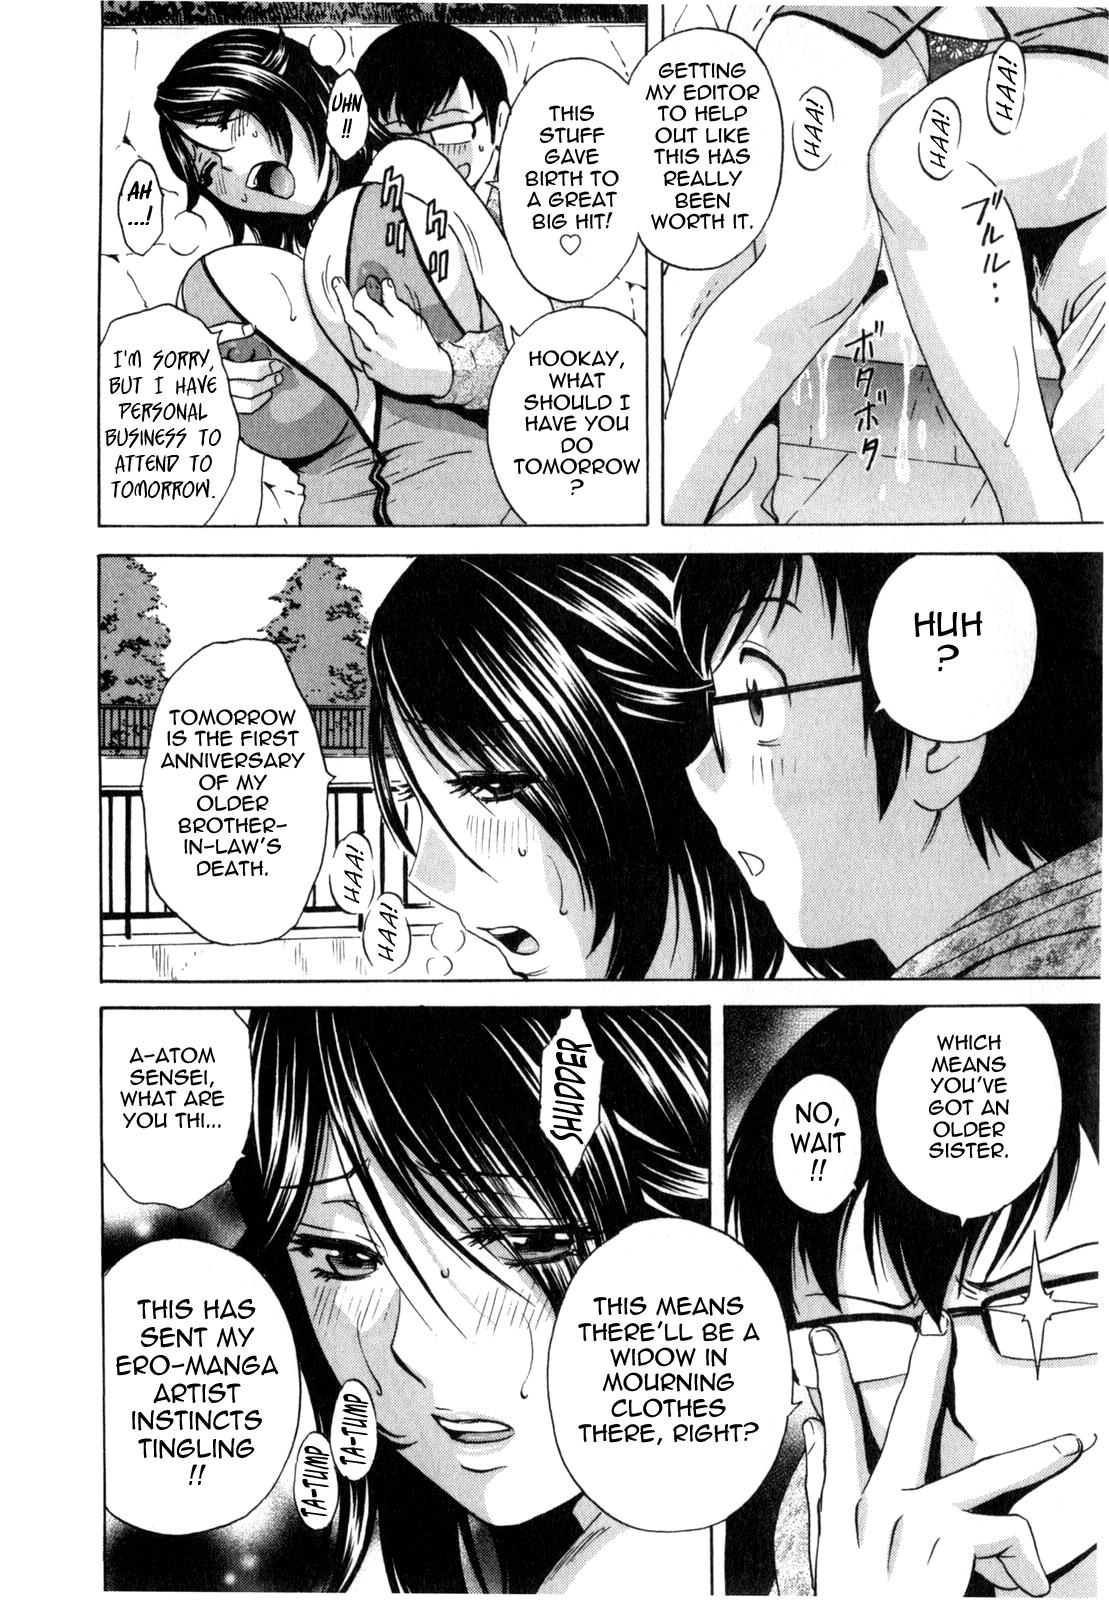 [Hidemaru] Life with Married Women Just Like a Manga 3 - Ch. 1-7 [English] {Tadanohito} 91